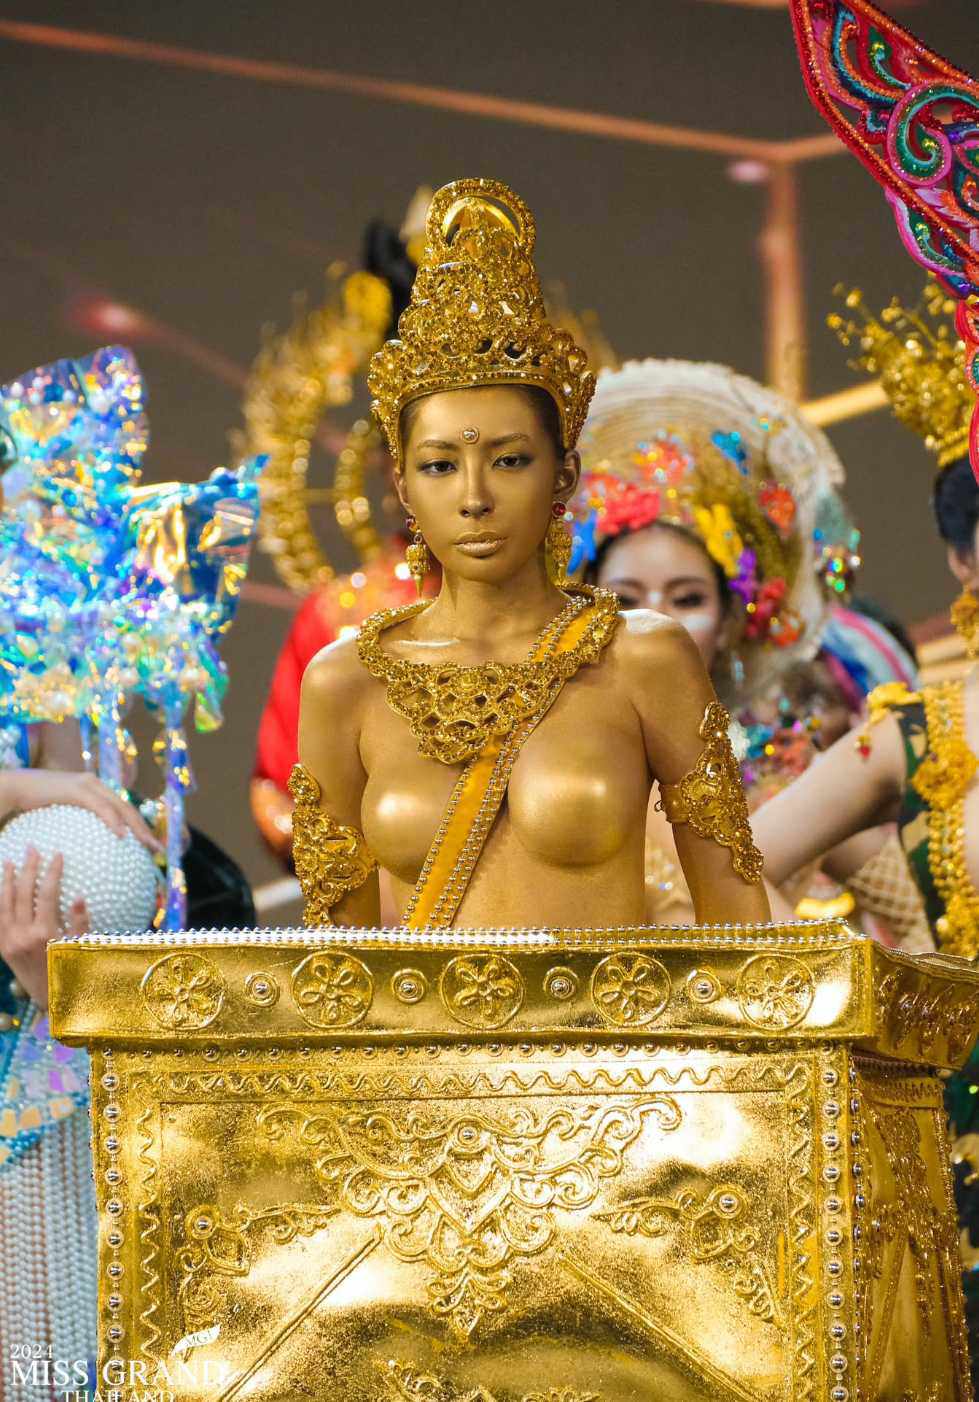 Miss Grand Thái Lan: Thí sinh hóa 